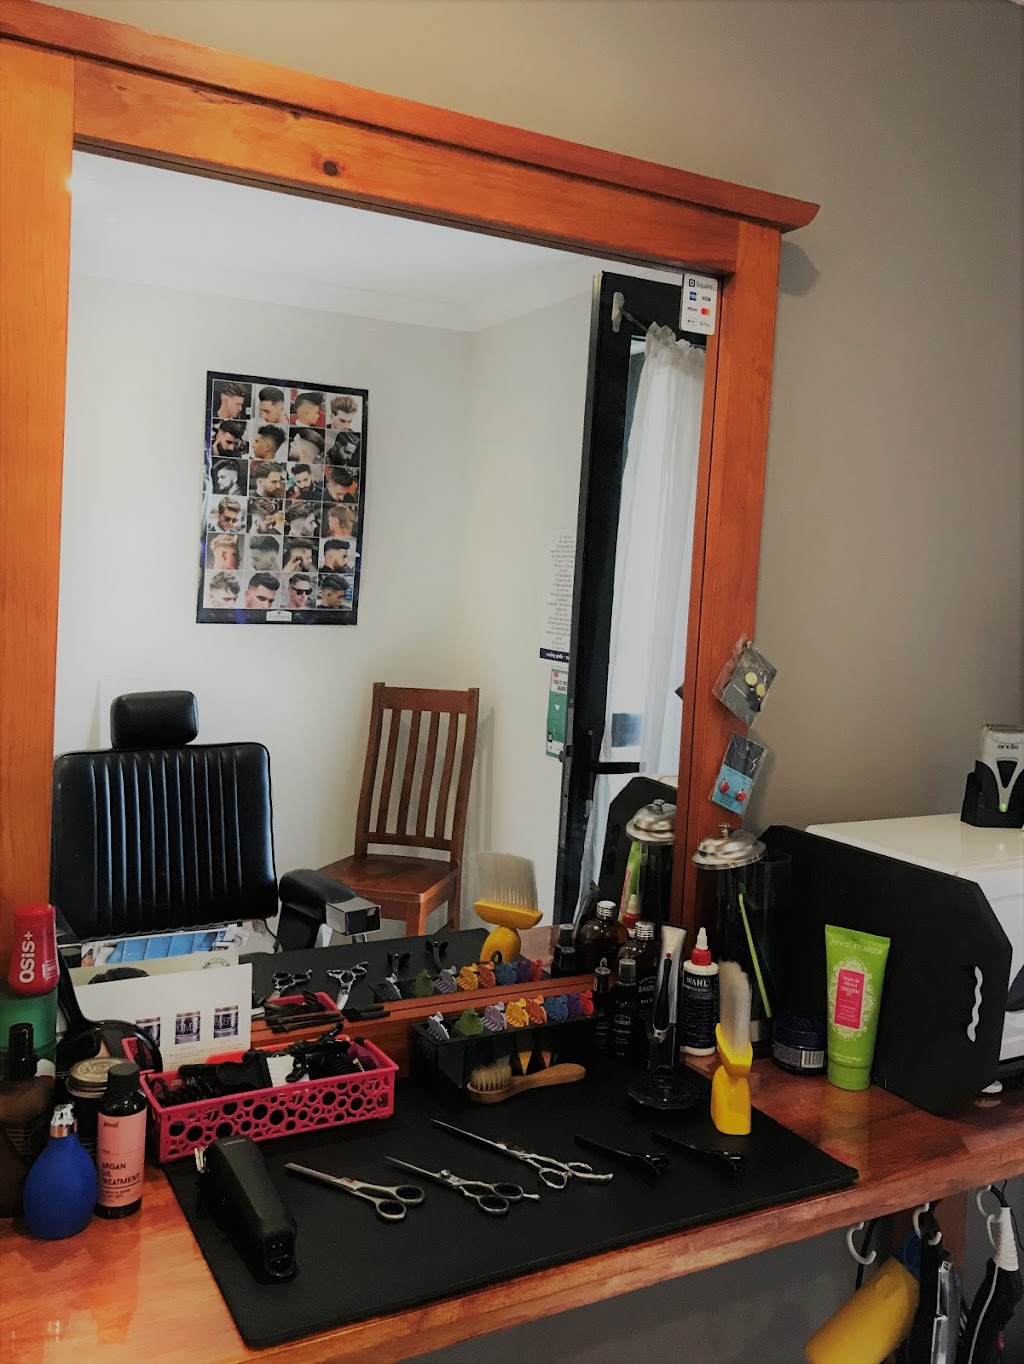 Leonies Barbershop & Hair Studio | 167 Lake Valley Dr, Lakelands WA 6180, Australia | Phone: 0419 020 159